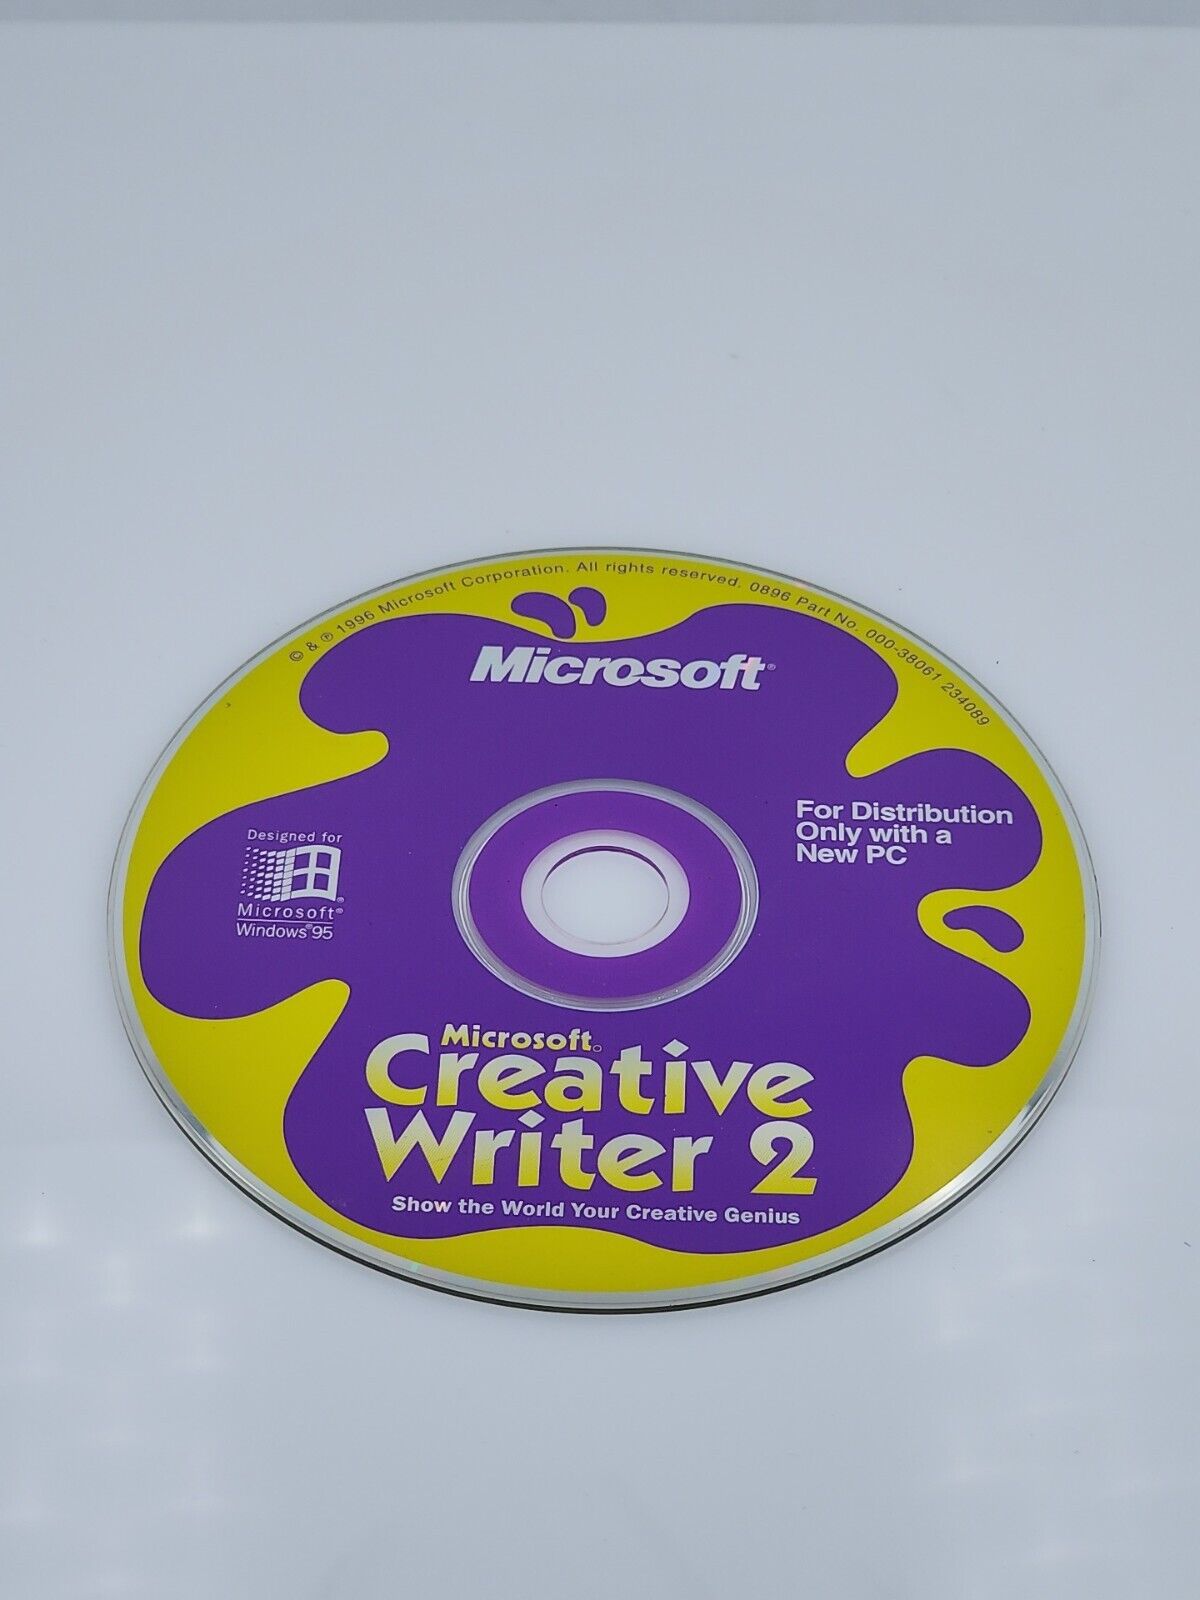 Microsoft Creative Writer 2 CD for PC Designed for Windows 95 1996 Graphics Art